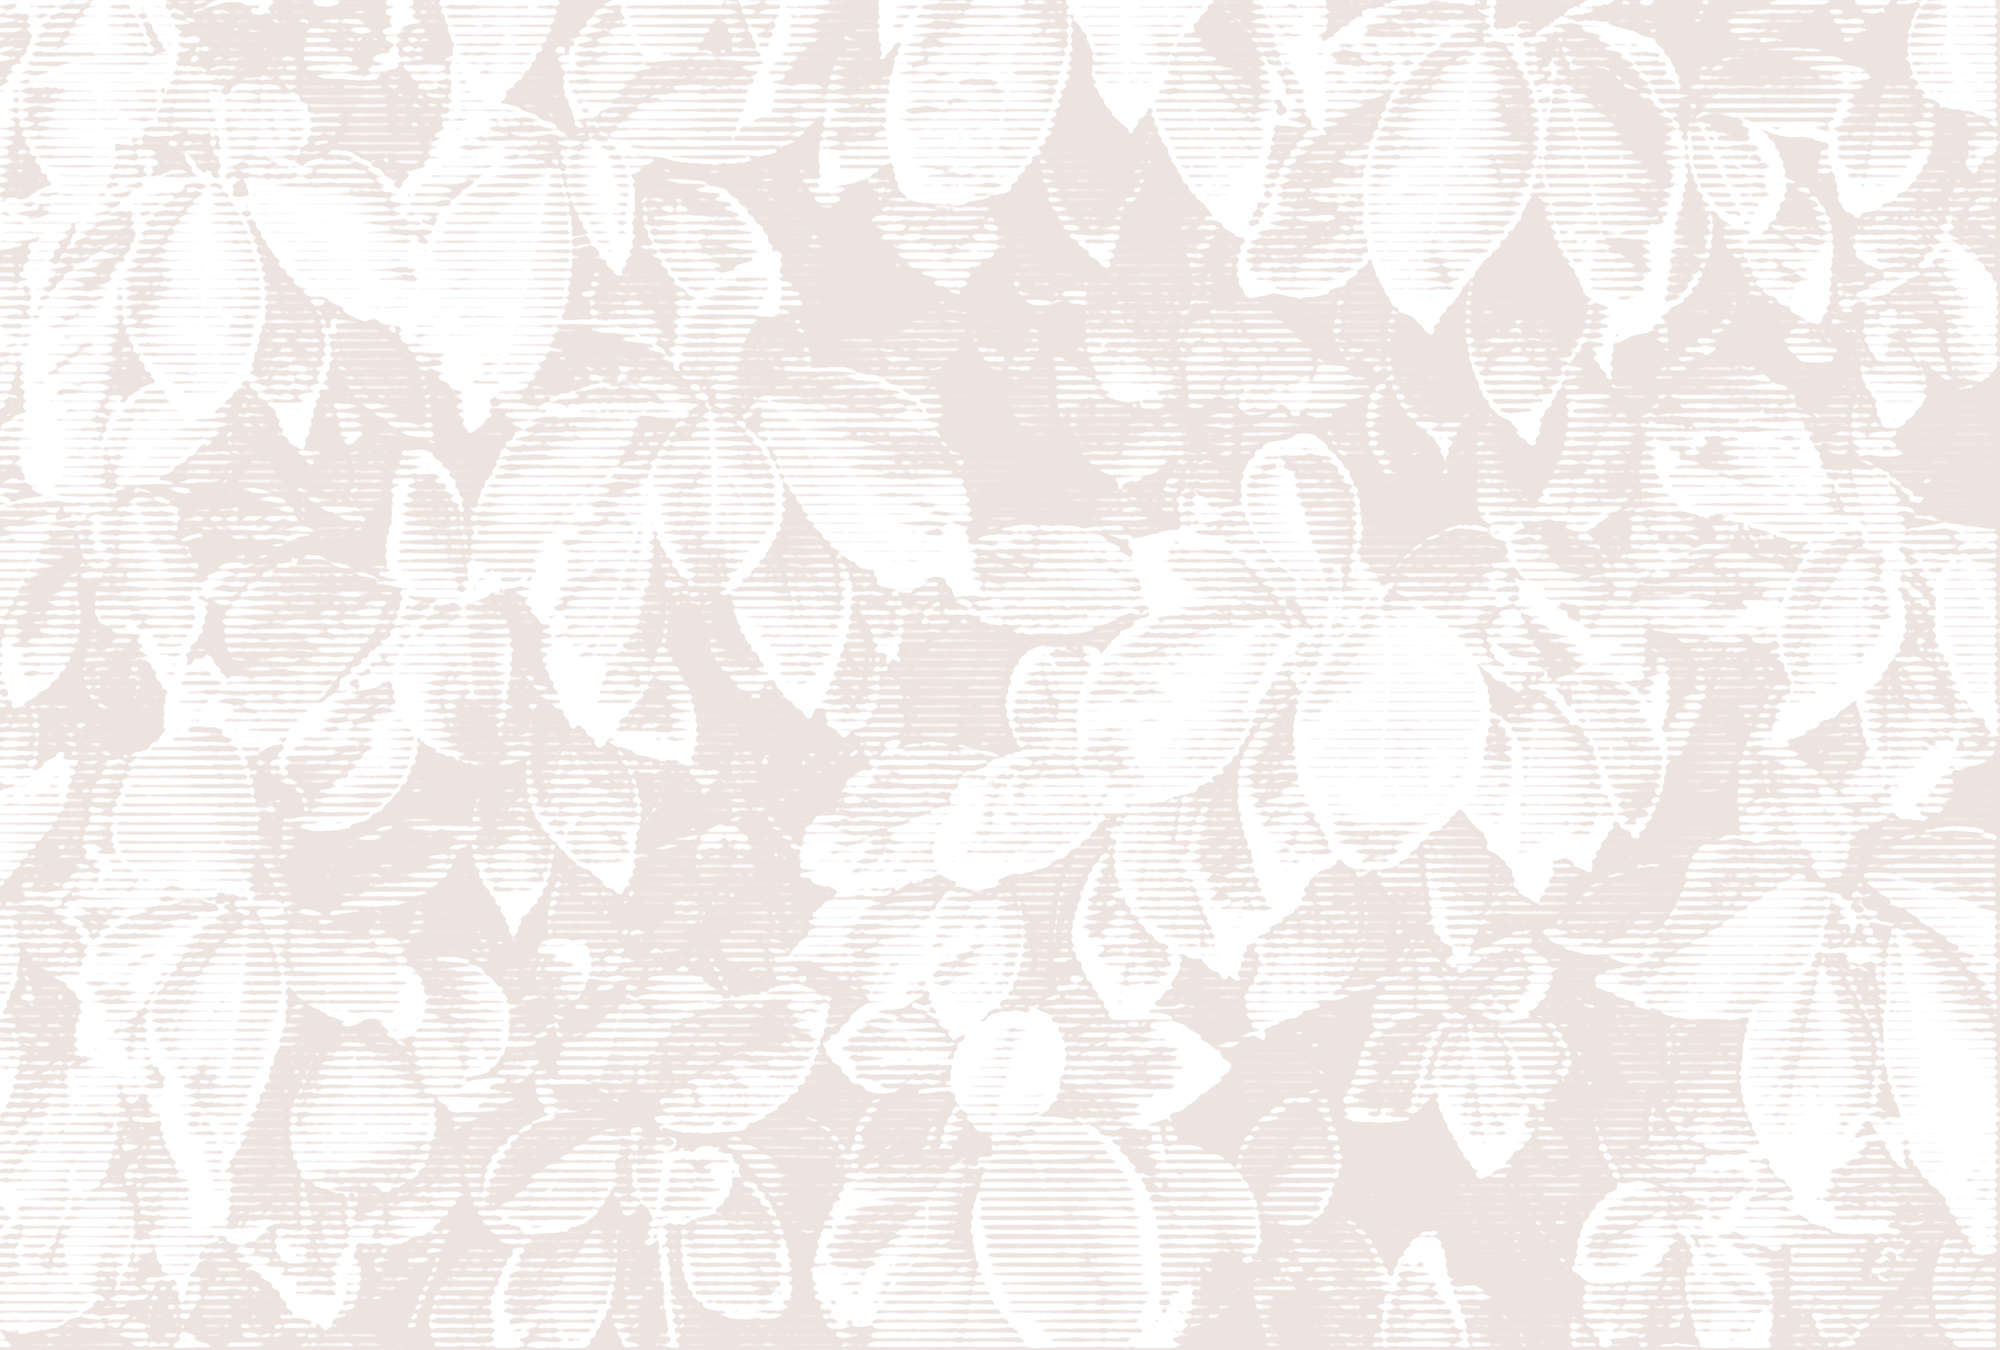             Carta da parati a foglie in stile Shabby Chic - Rosa, bianco
        